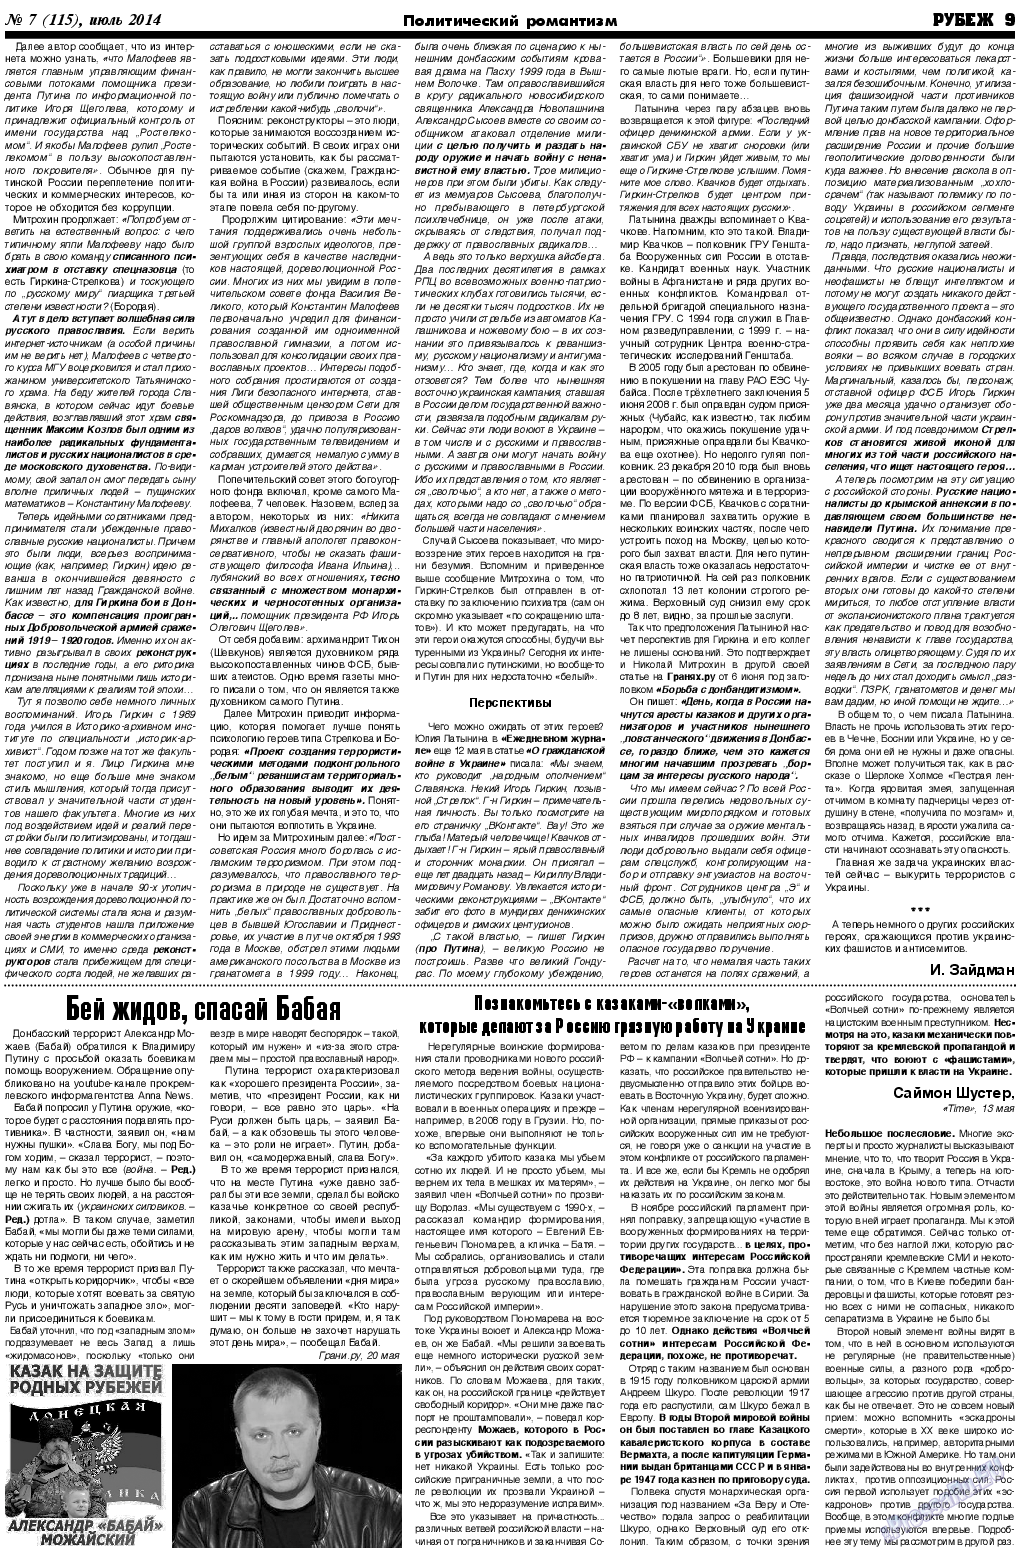 Рубеж, газета. 2014 №7 стр.9